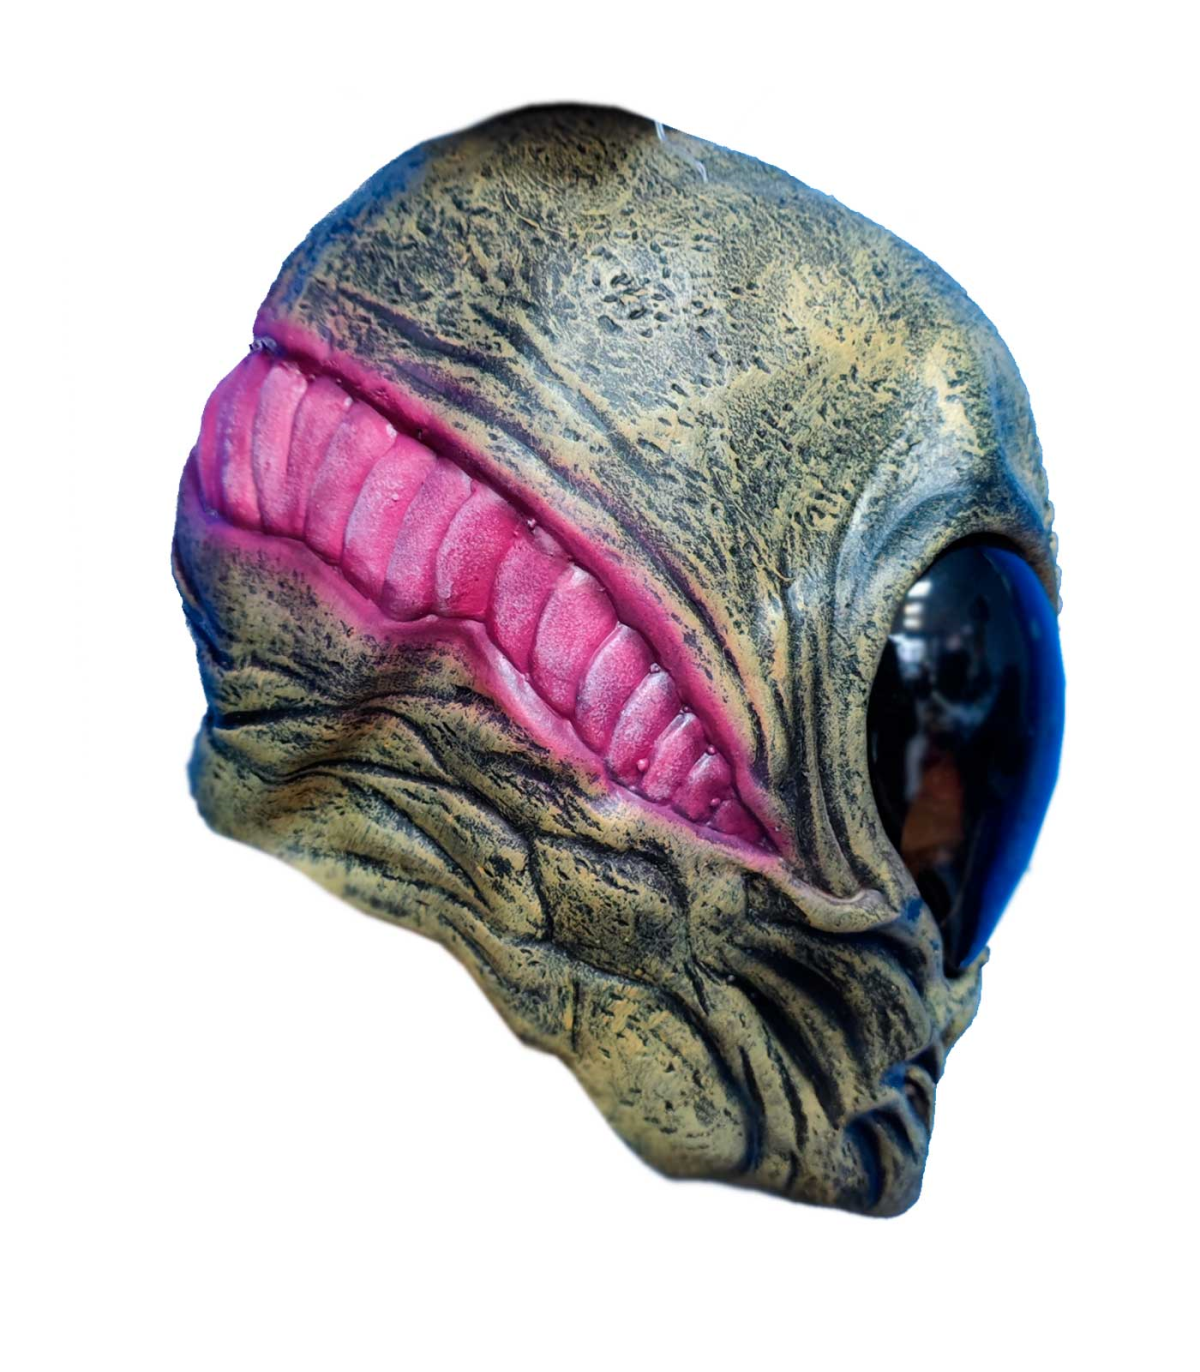 Mascara Alien - Disfraces Teular